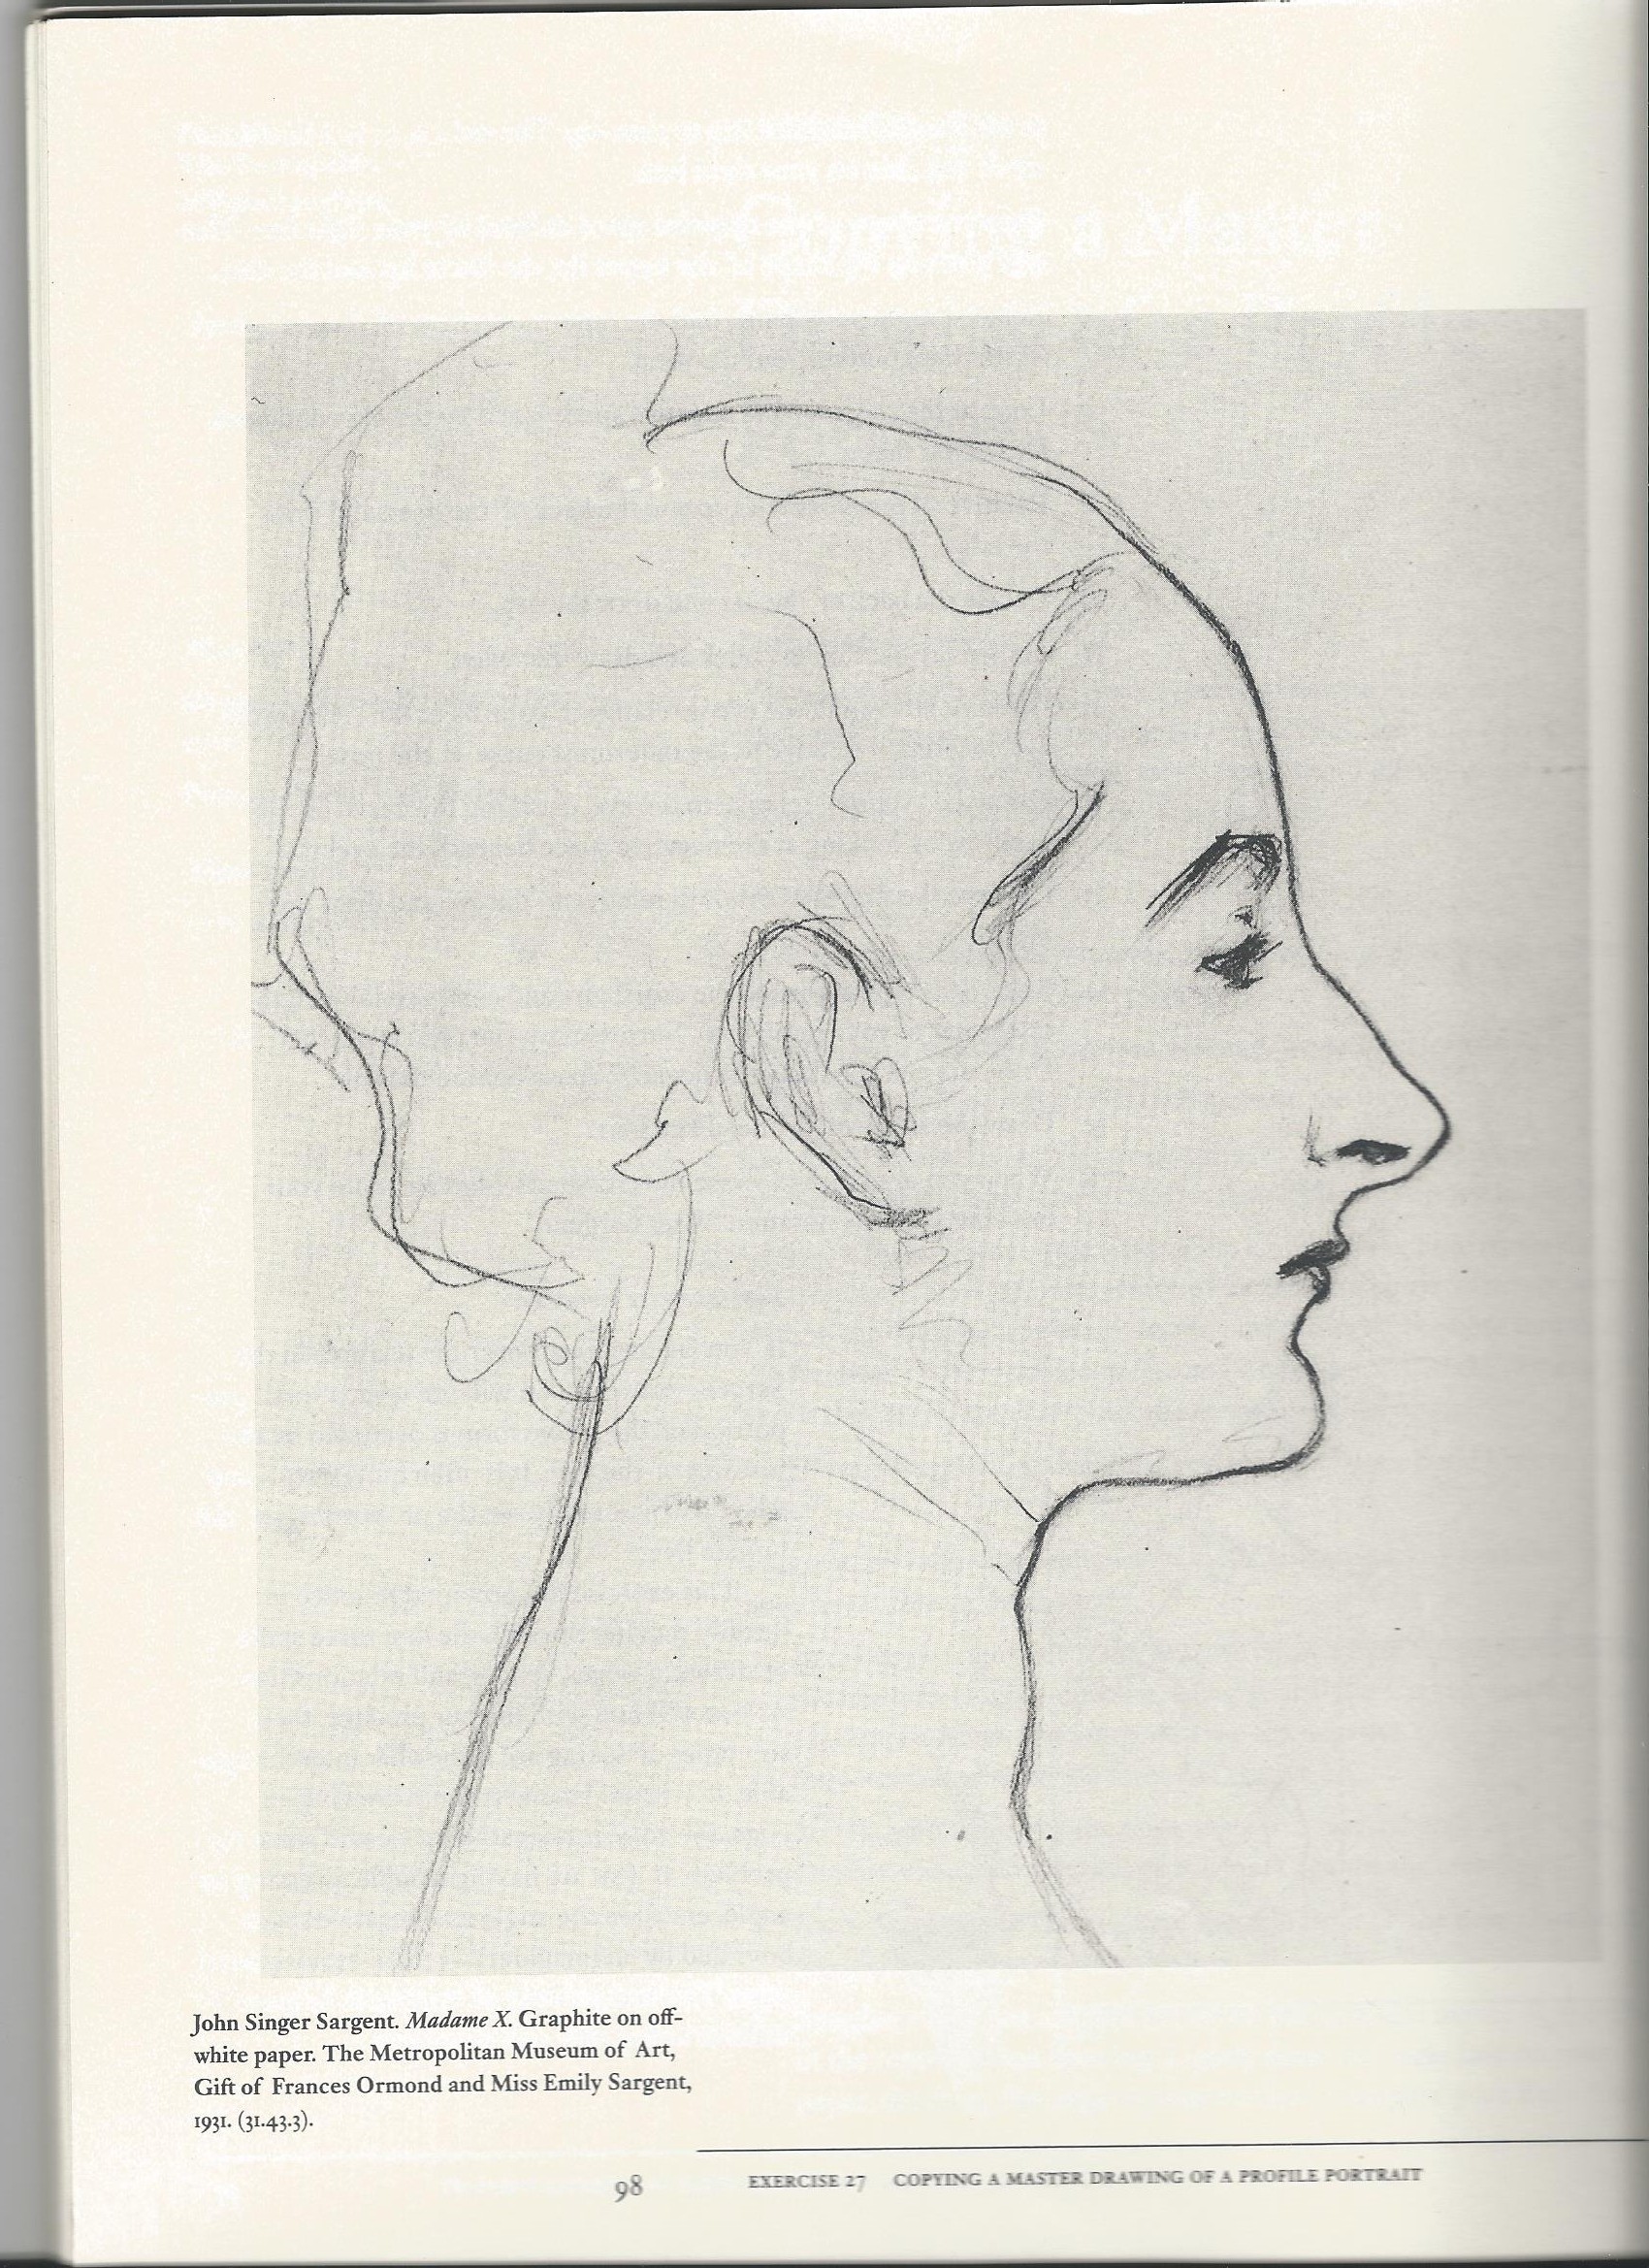 Sargent Portrait Drawings: 42 Works (Dover Fine Art, History of Art) eBook  : Sargent, John Singer: Amazon.co.uk: Kindle Store